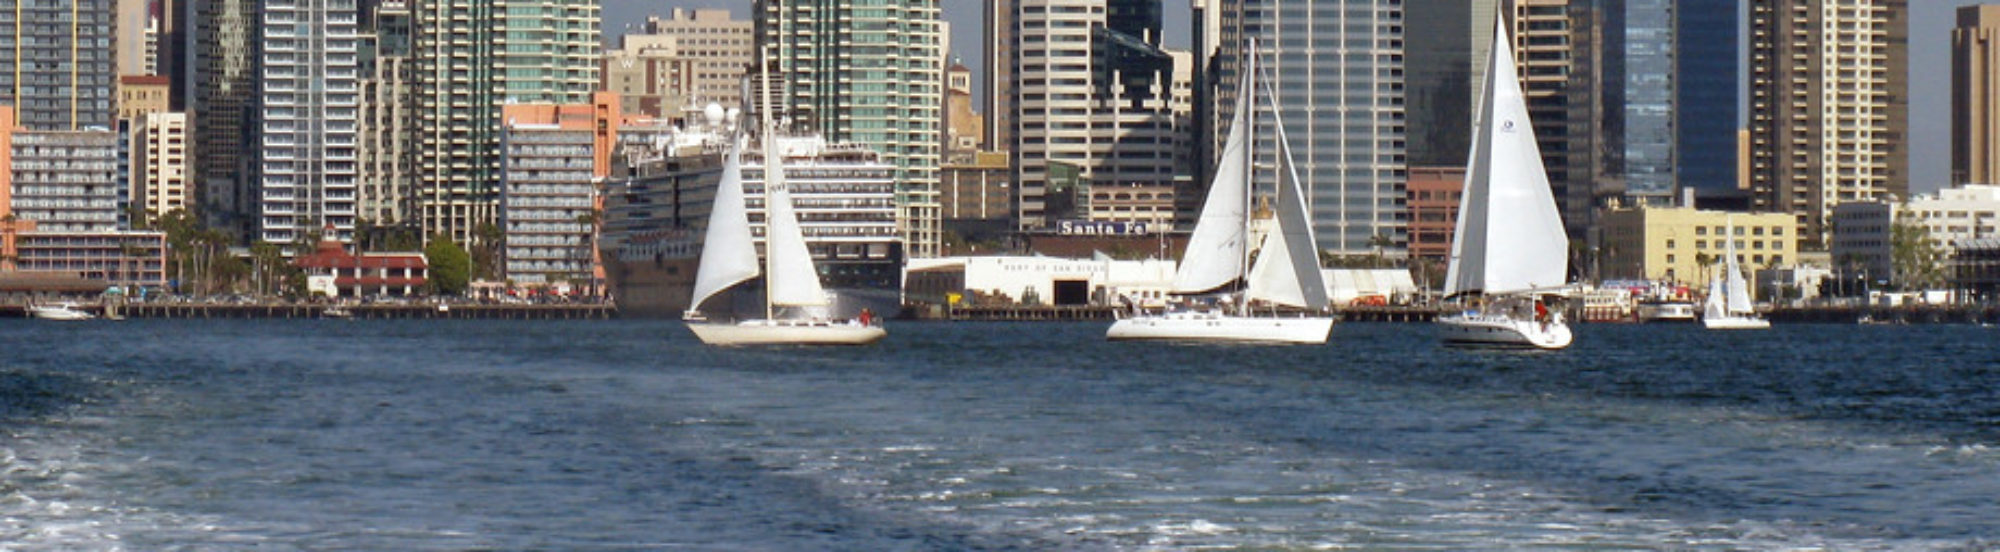 San Diego Sail and Power Squadron